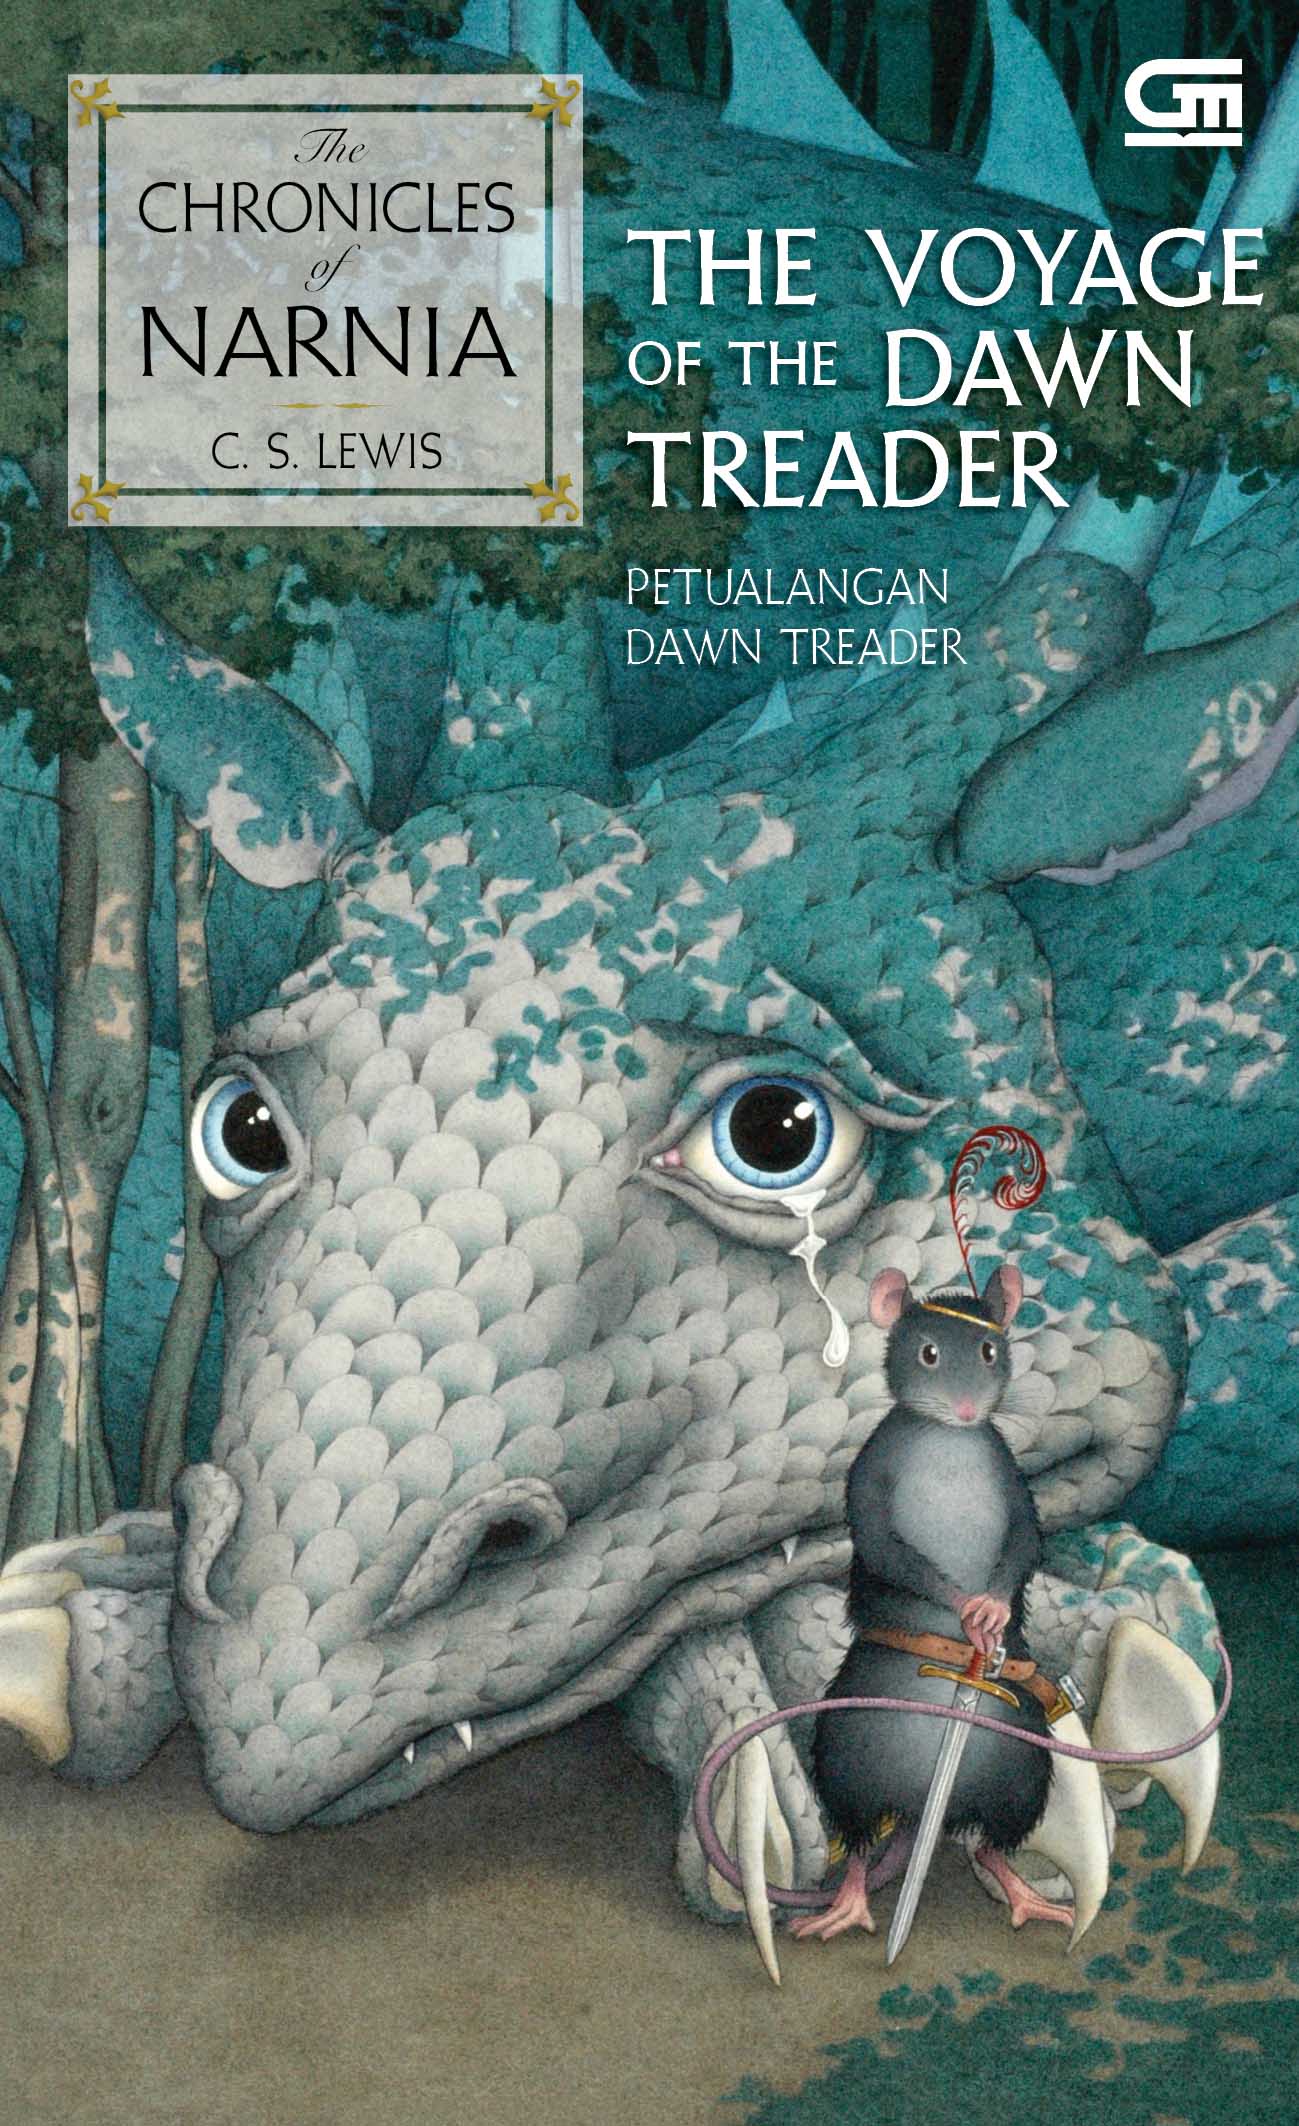 The Chronicles of Narnia #5: The Voyage of the Dawn Treader (Petualangan Dawn Treader)